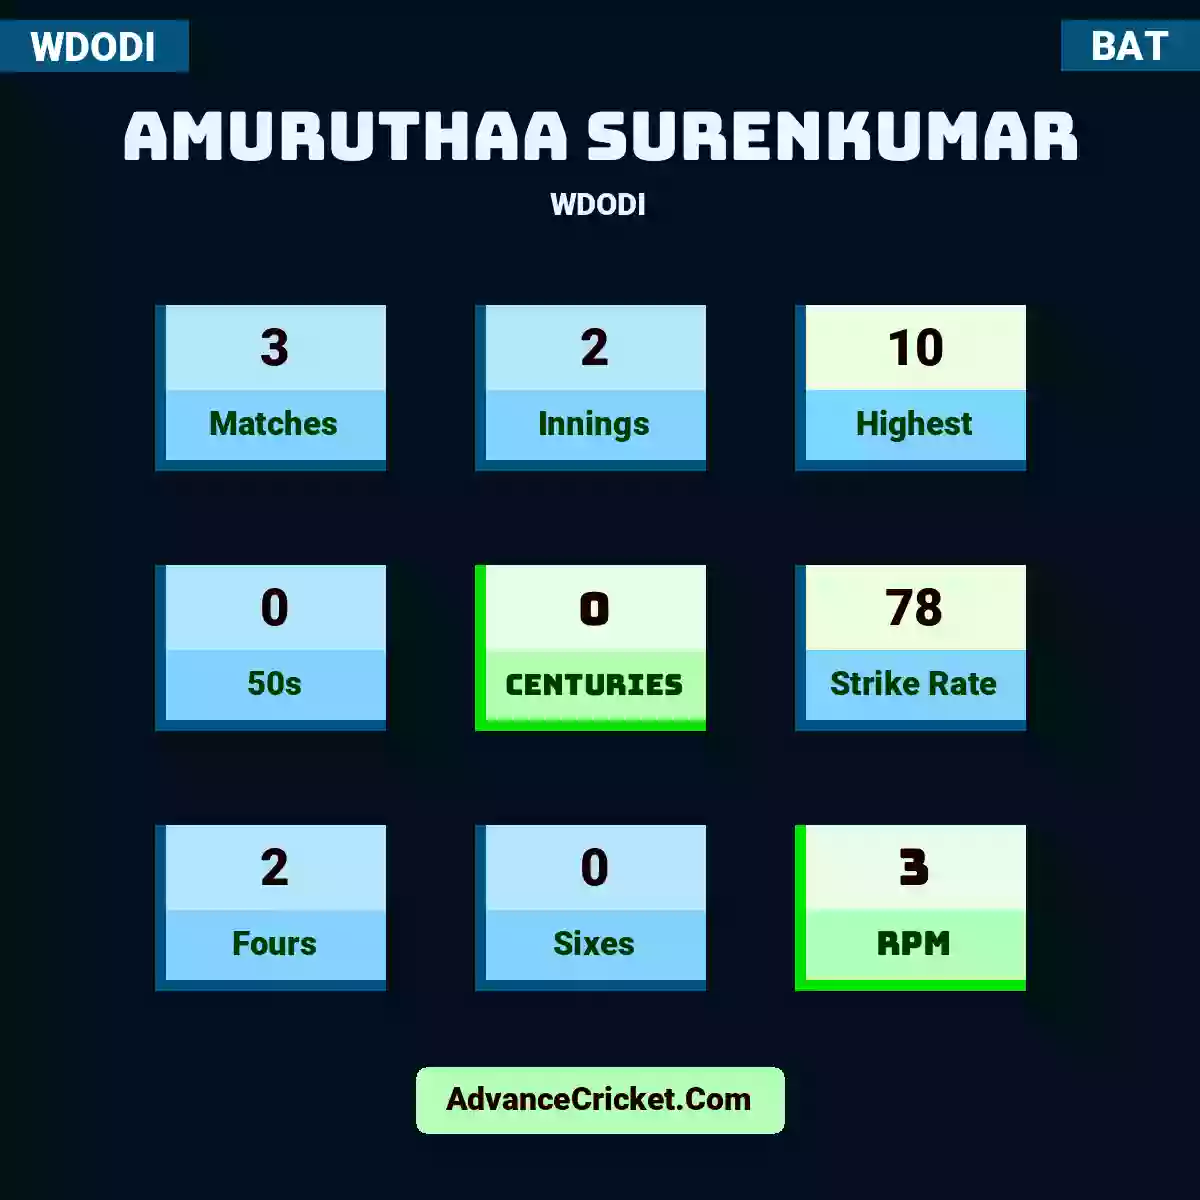 Amuruthaa Surenkumar WDODI , Amuruthaa Surenkumar played 3 matches, scored 10 runs as highest, 0 half-centuries, and 0 centuries, with a strike rate of 78. A.Surenkumar hit 2 fours and 0 sixes, with an RPM of 3.